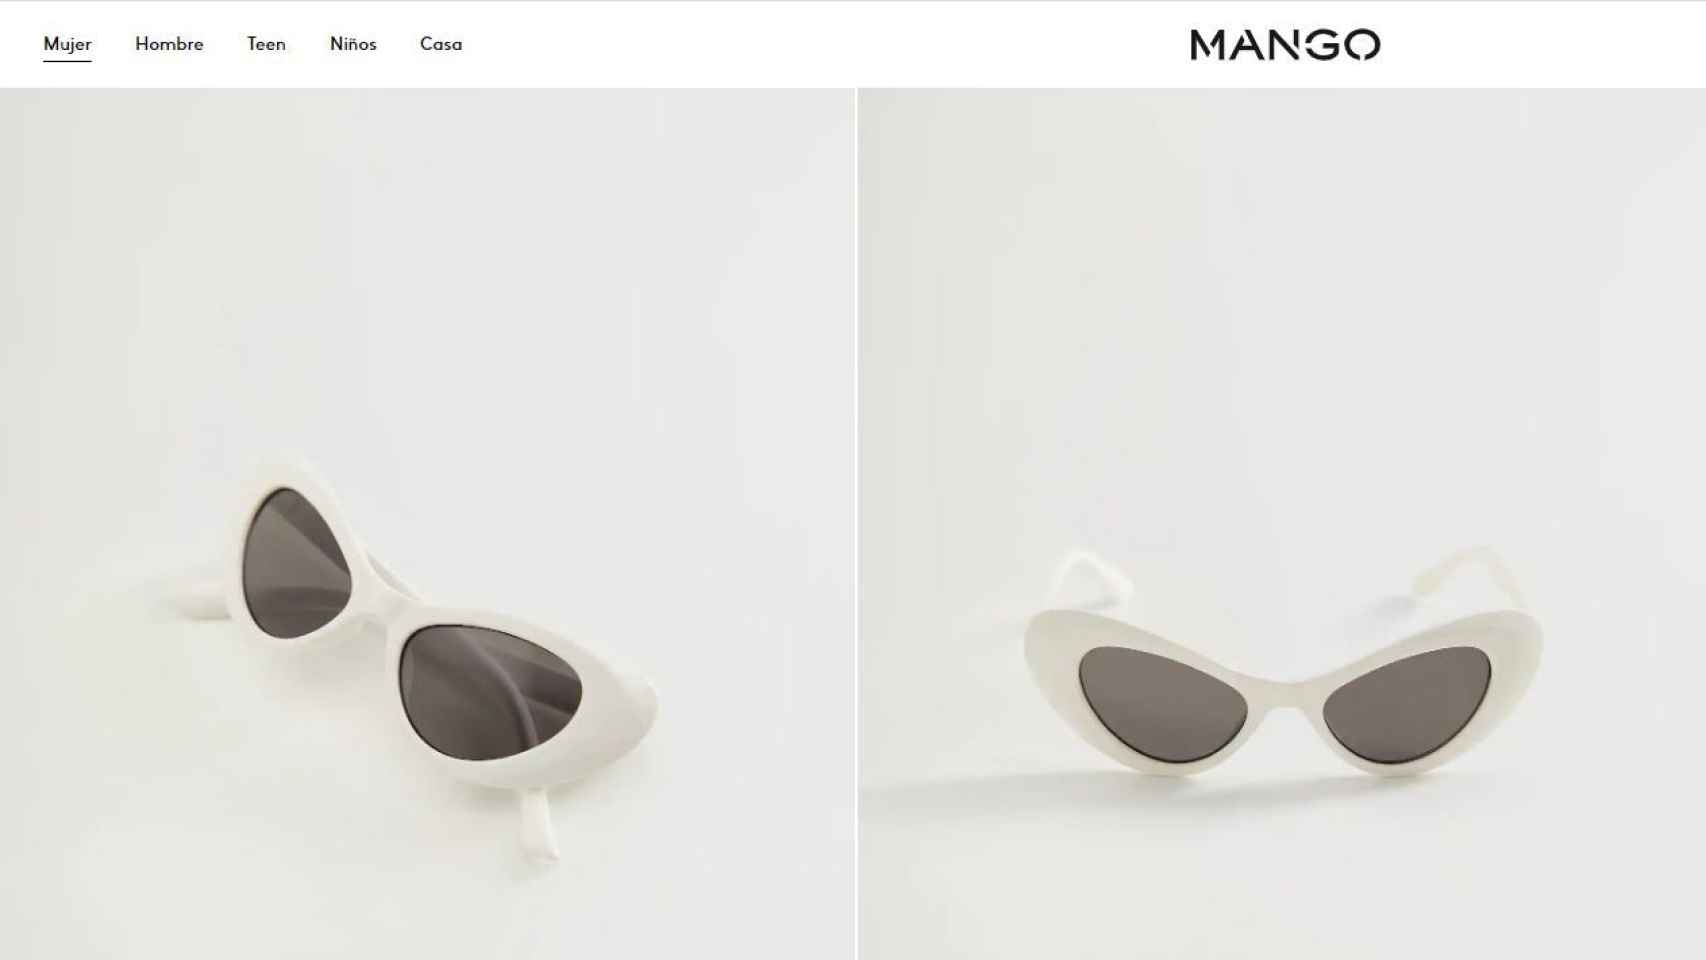 Gafas de sol de Mango - 9,99 euros.